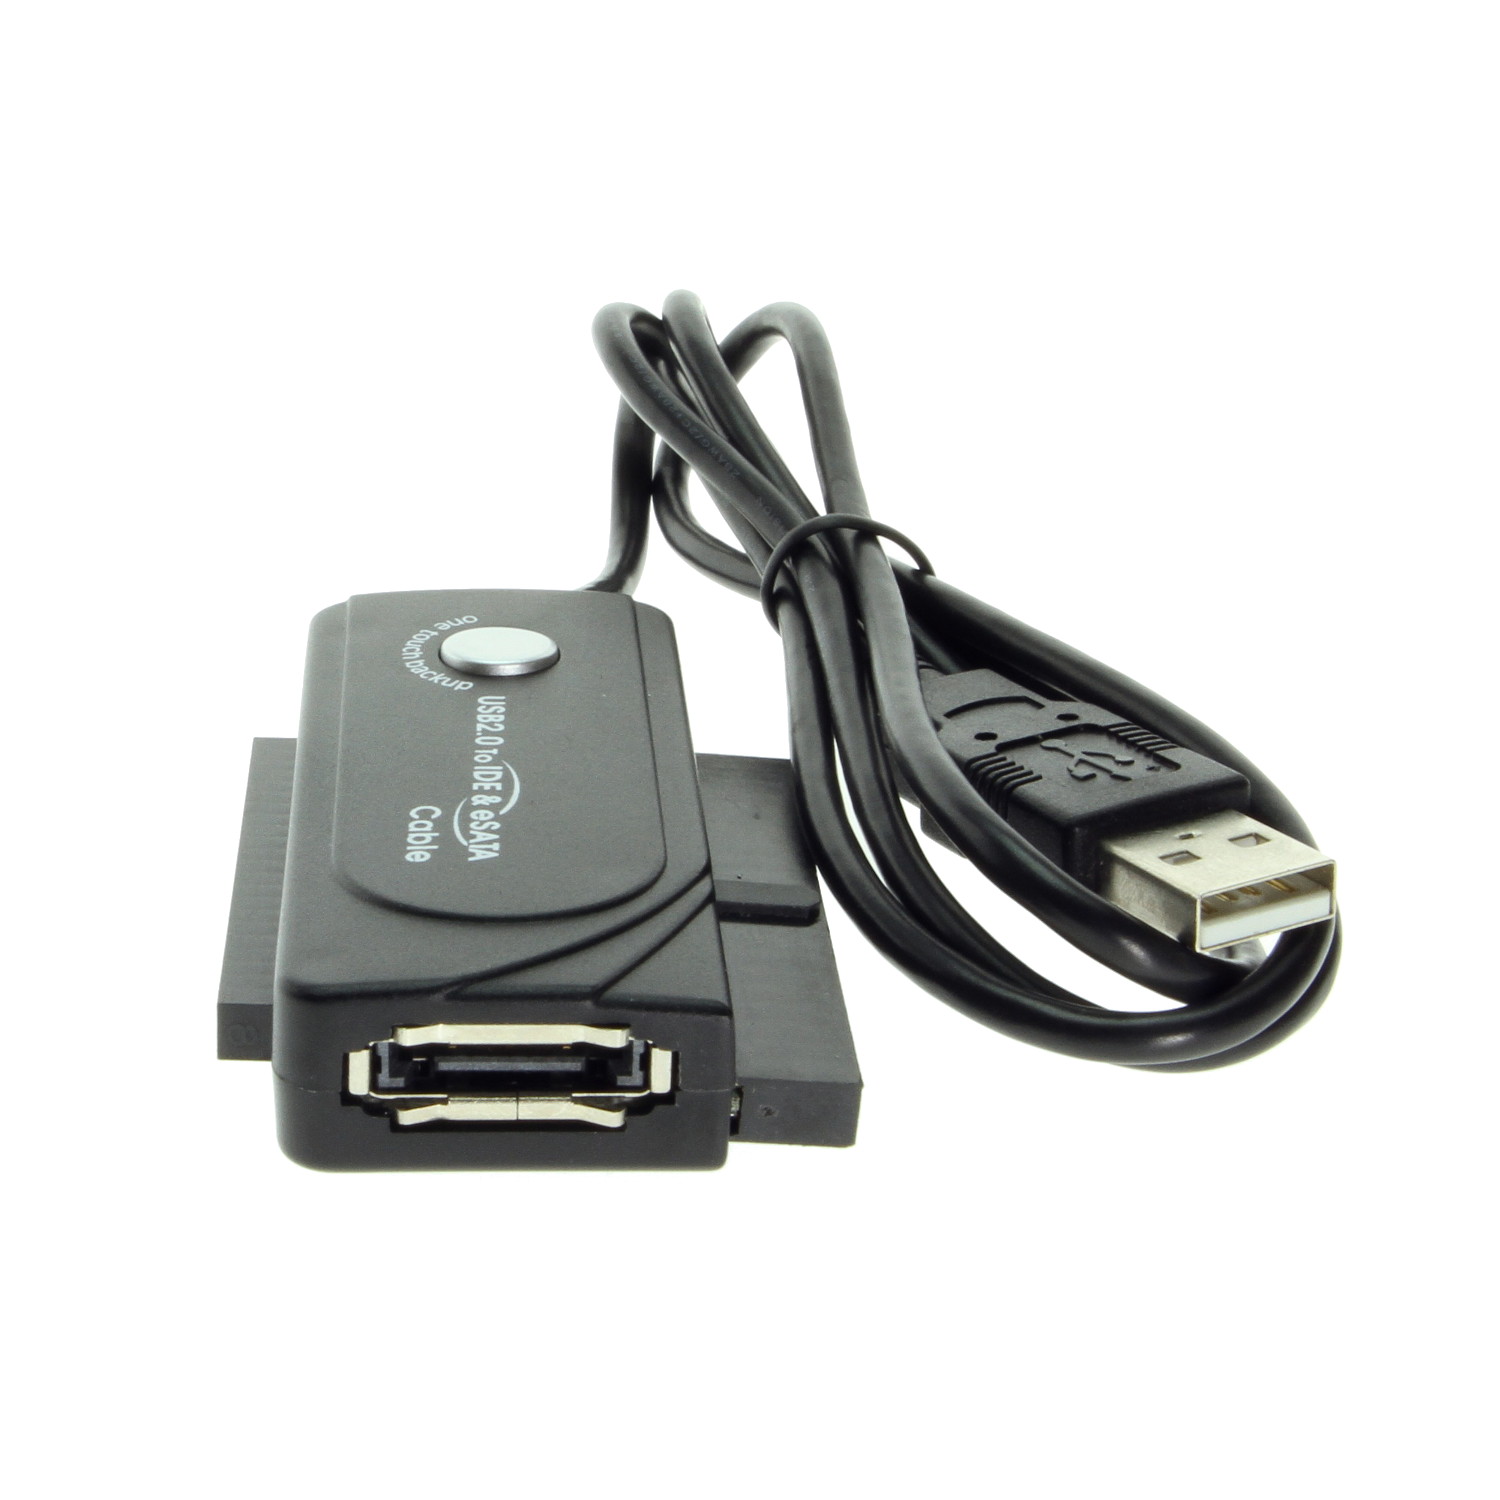 USB 2.0 TO Serial ATA SATA/eSATA Bridge Adapter 